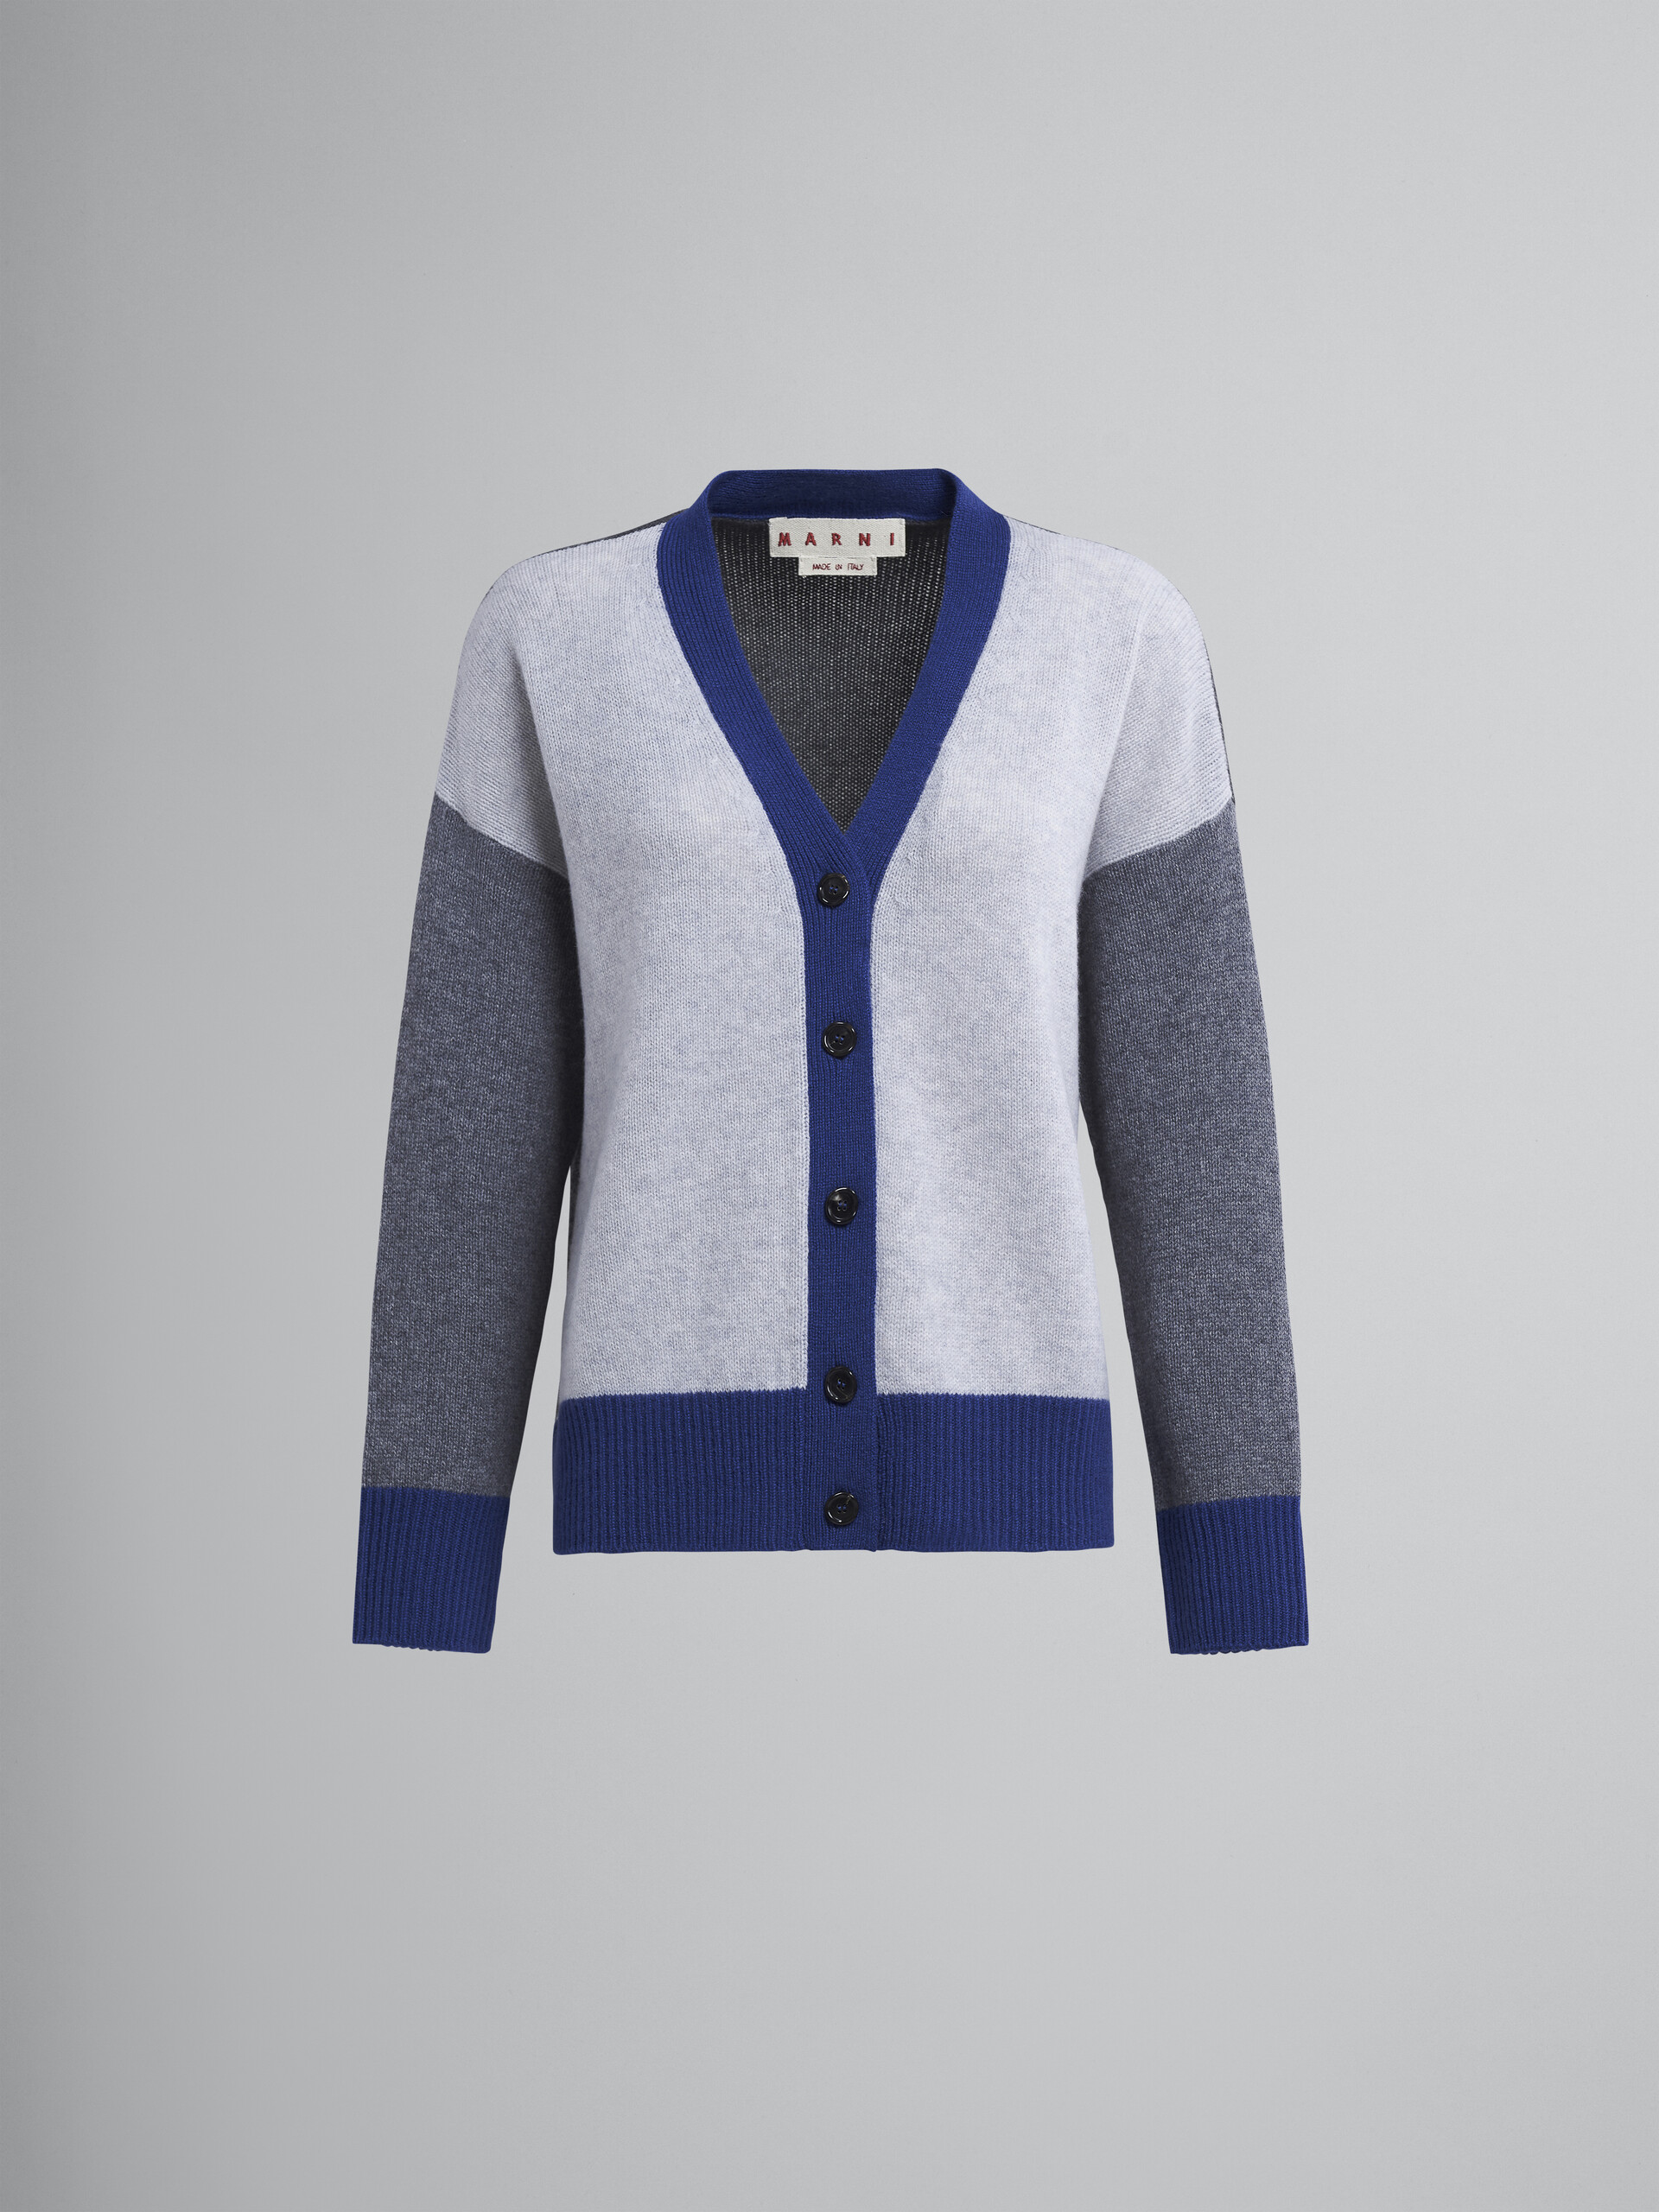 Iconic cashmere colourblock cardigan - Pullovers - Image 1